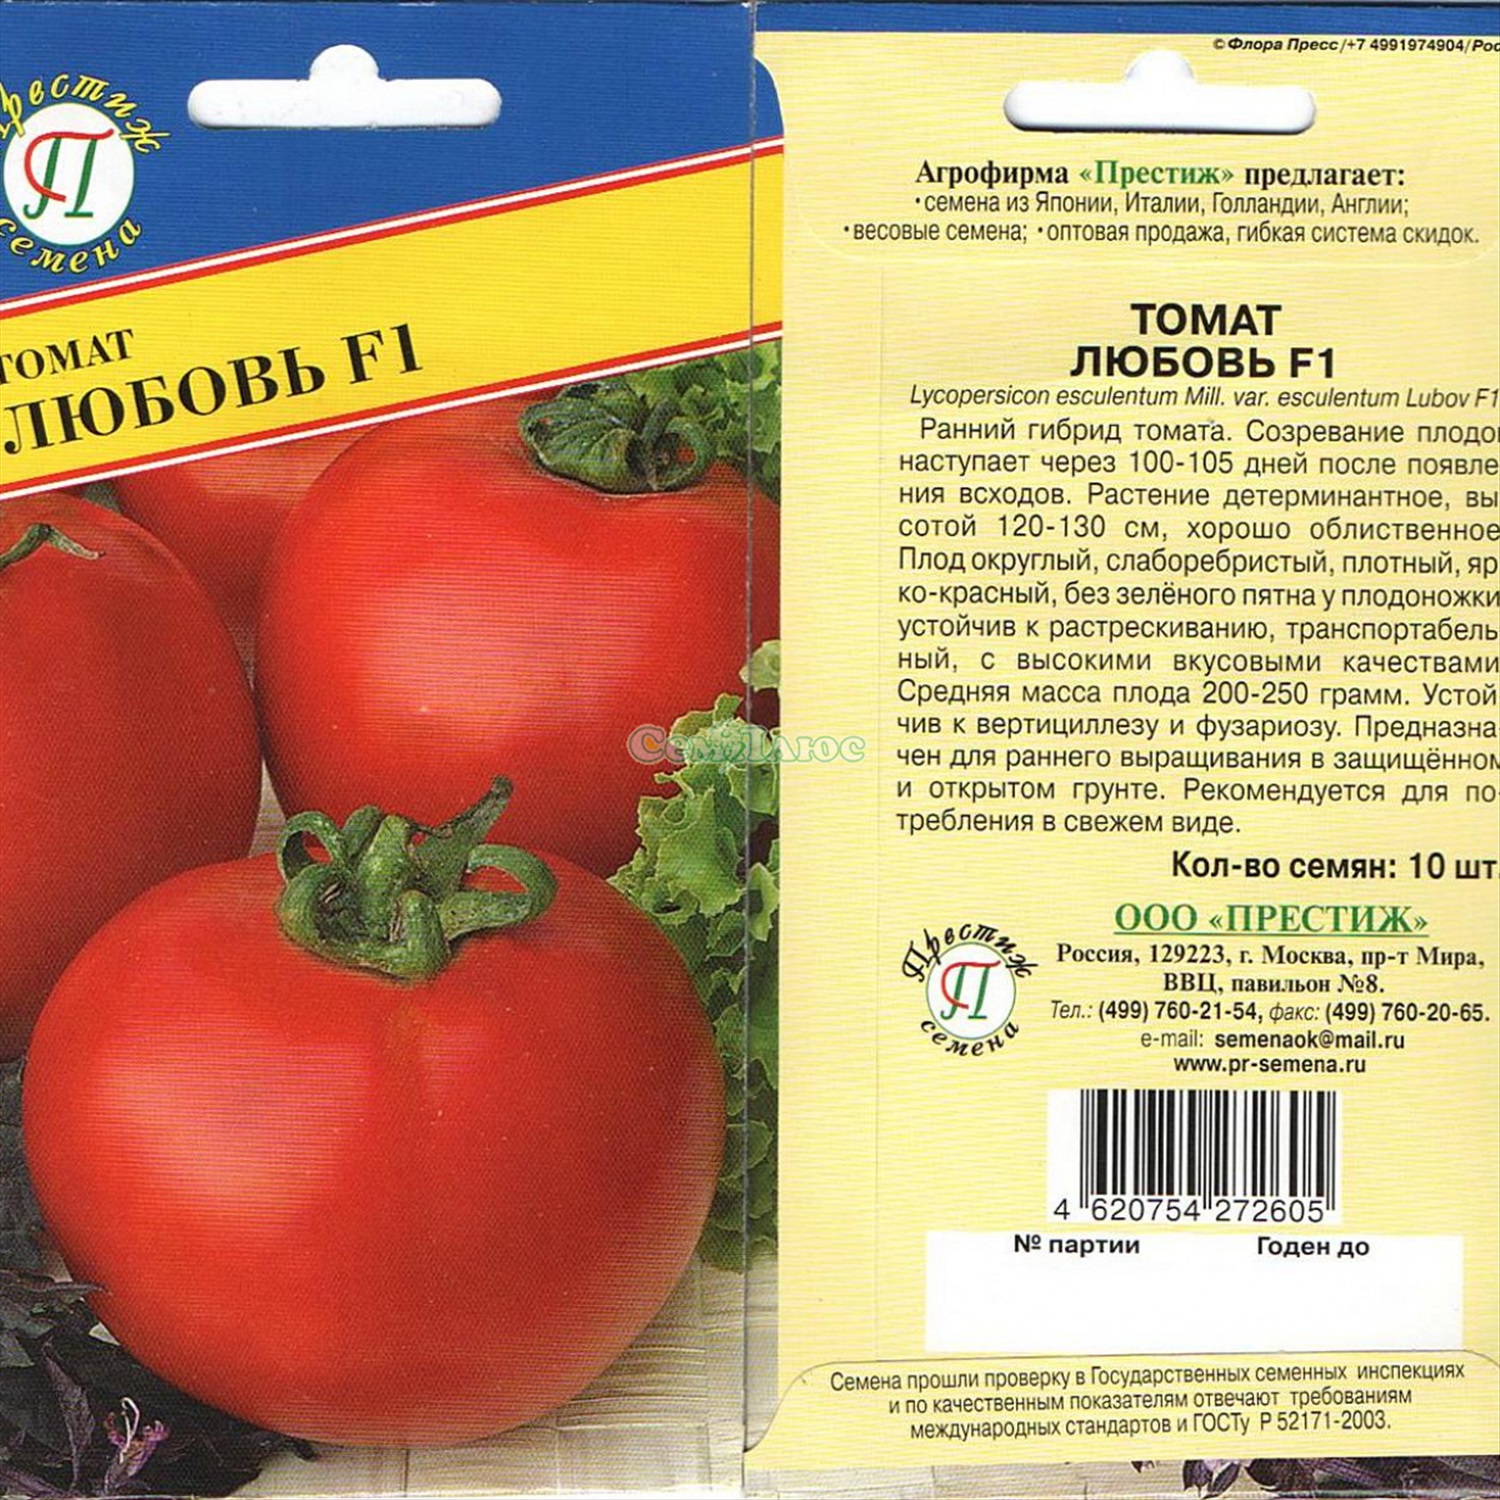 Сорт томата «демидов»: описание и характеристика среднеспелых помидоров